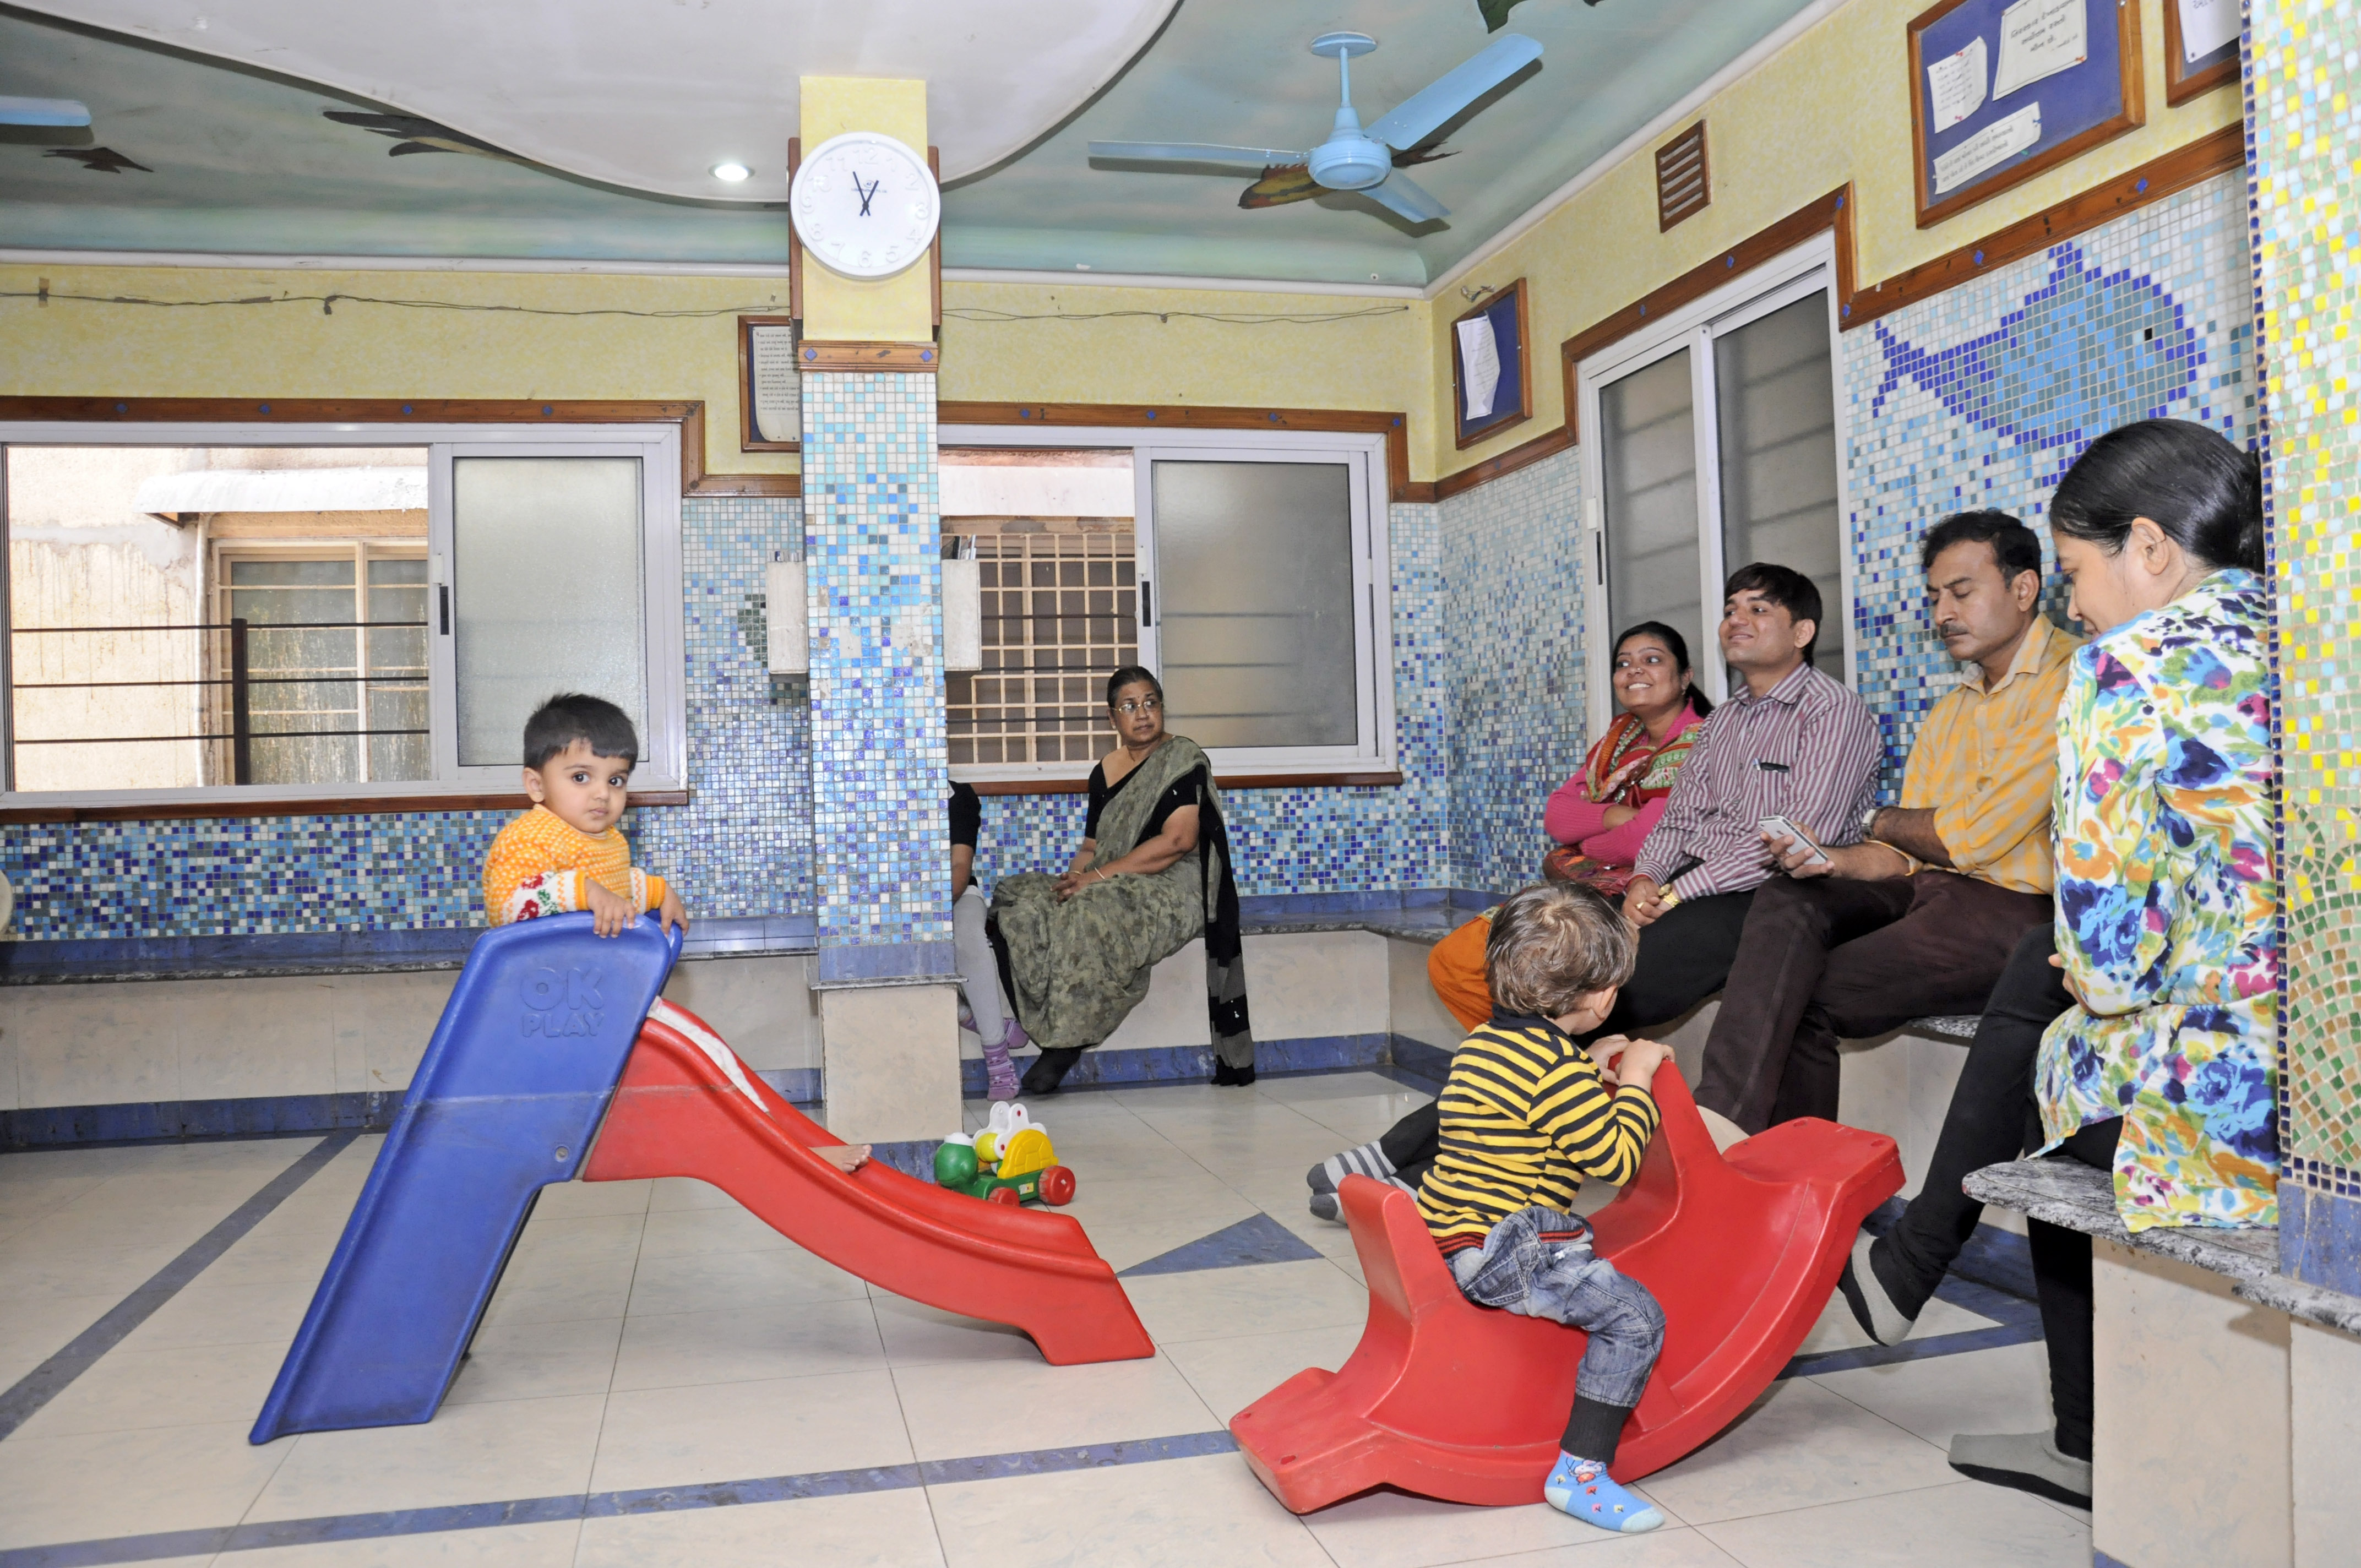 kalrav-hospital-waiting-area2